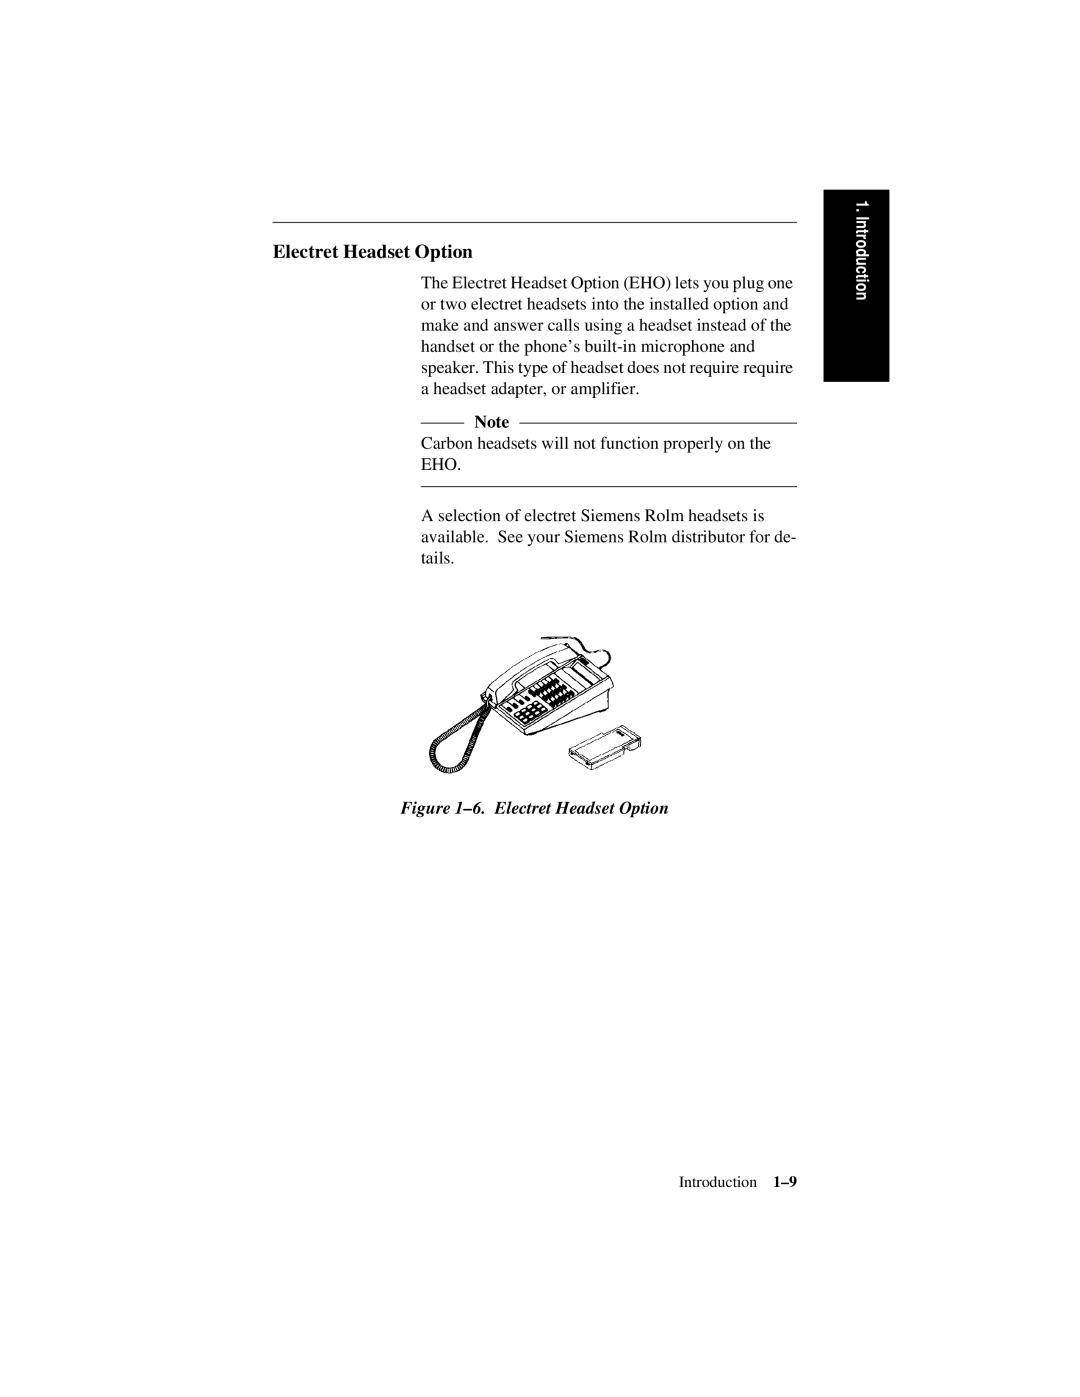 Siemens 600 Series, 300 Series manual 6. Electret Headset Option 